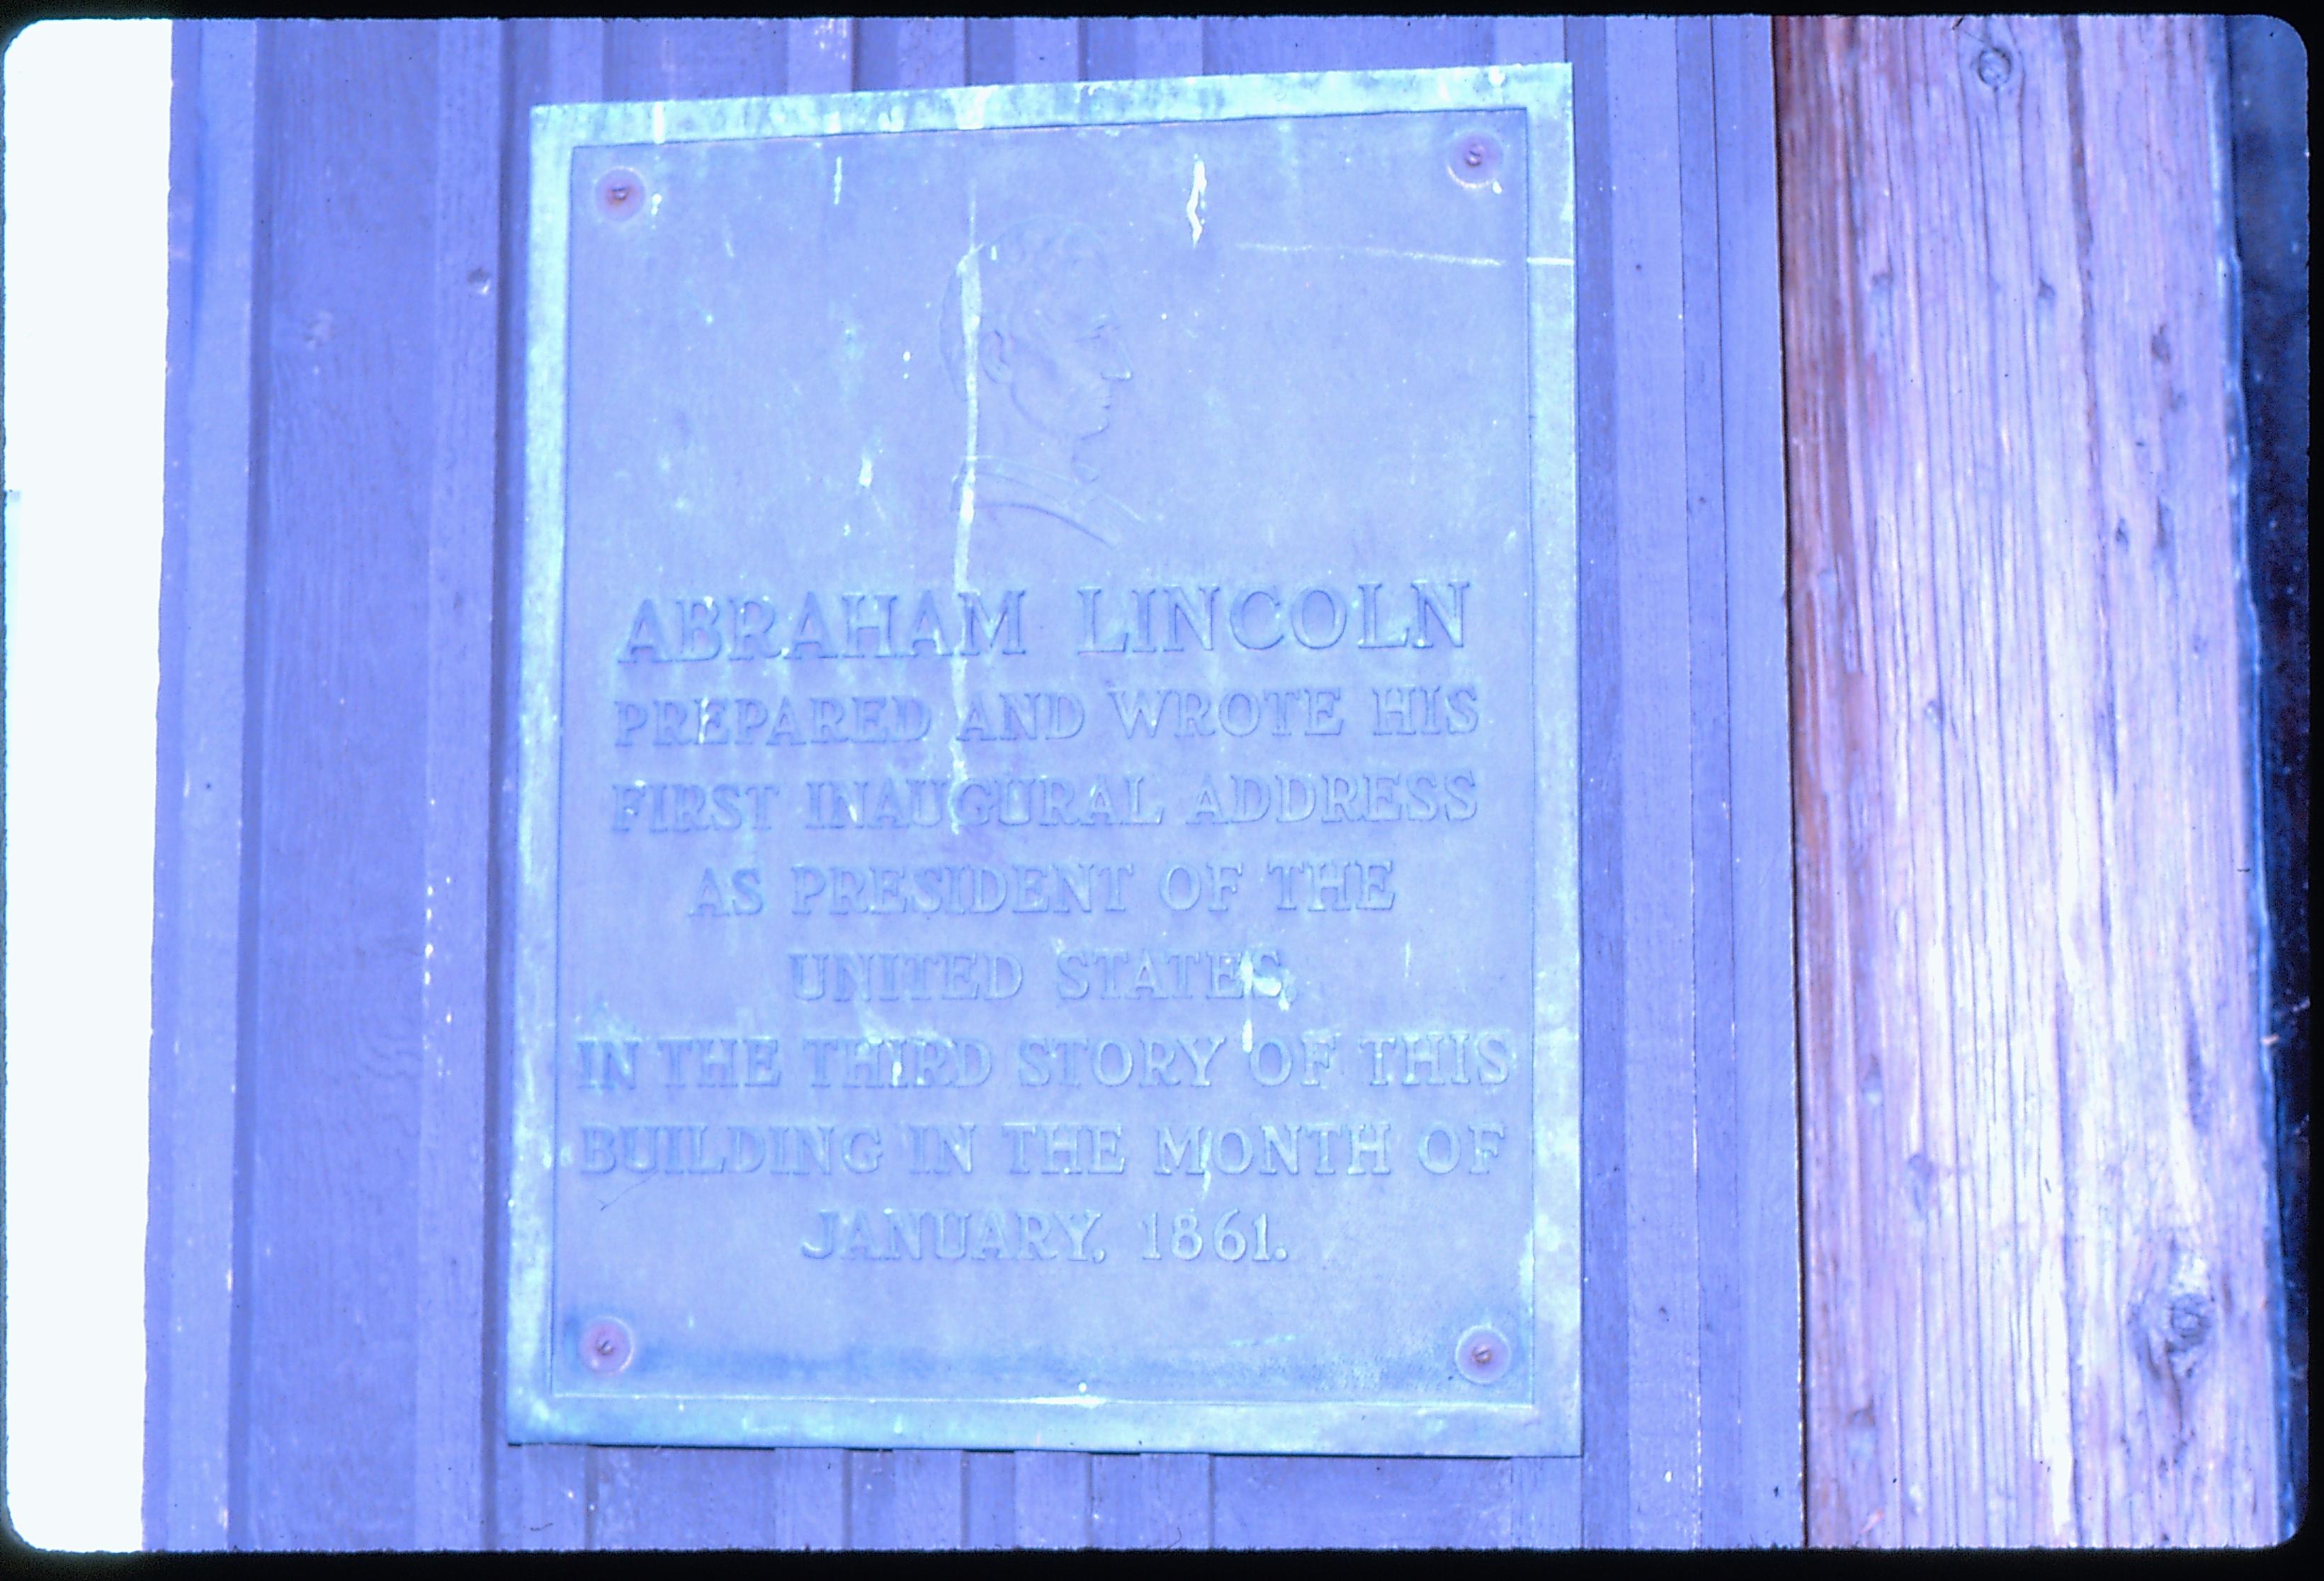 Historical plaque-First Inaugural address written here. First Presbyterian Church